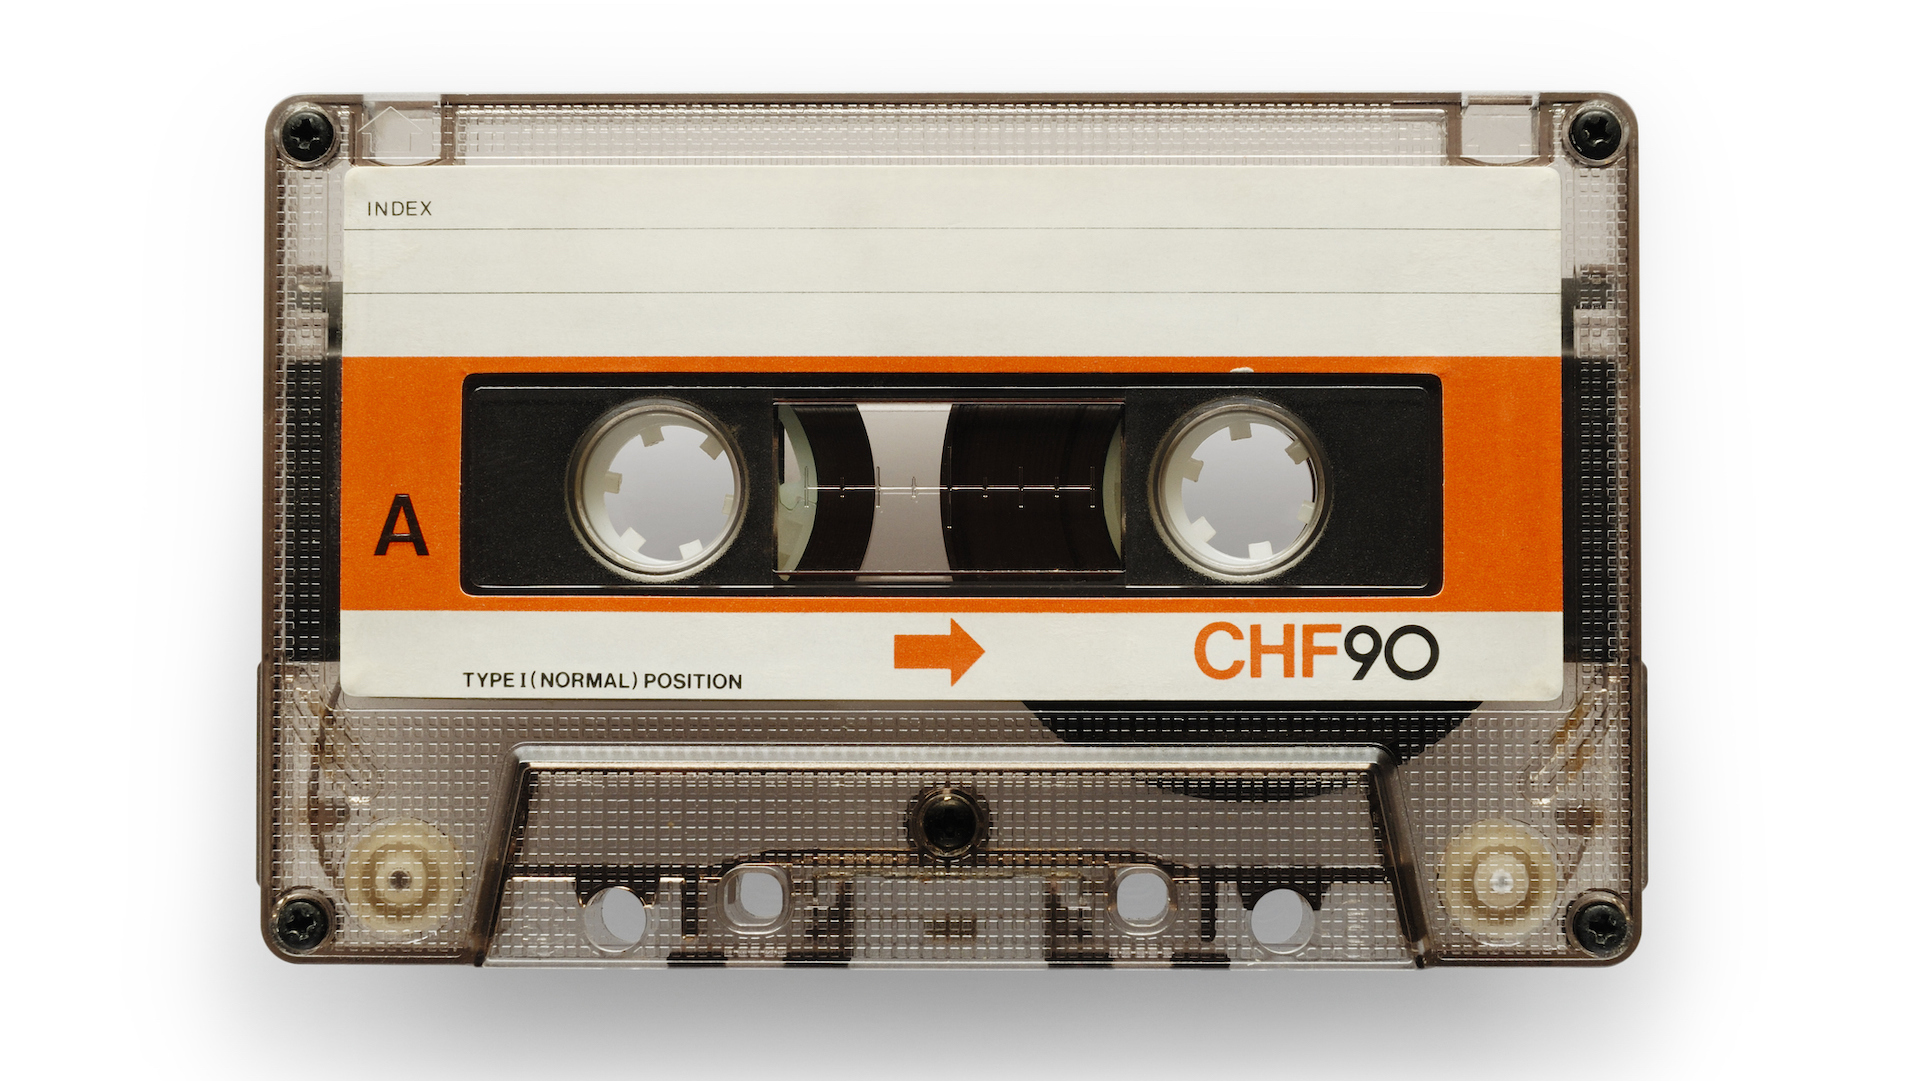 A cassette tape